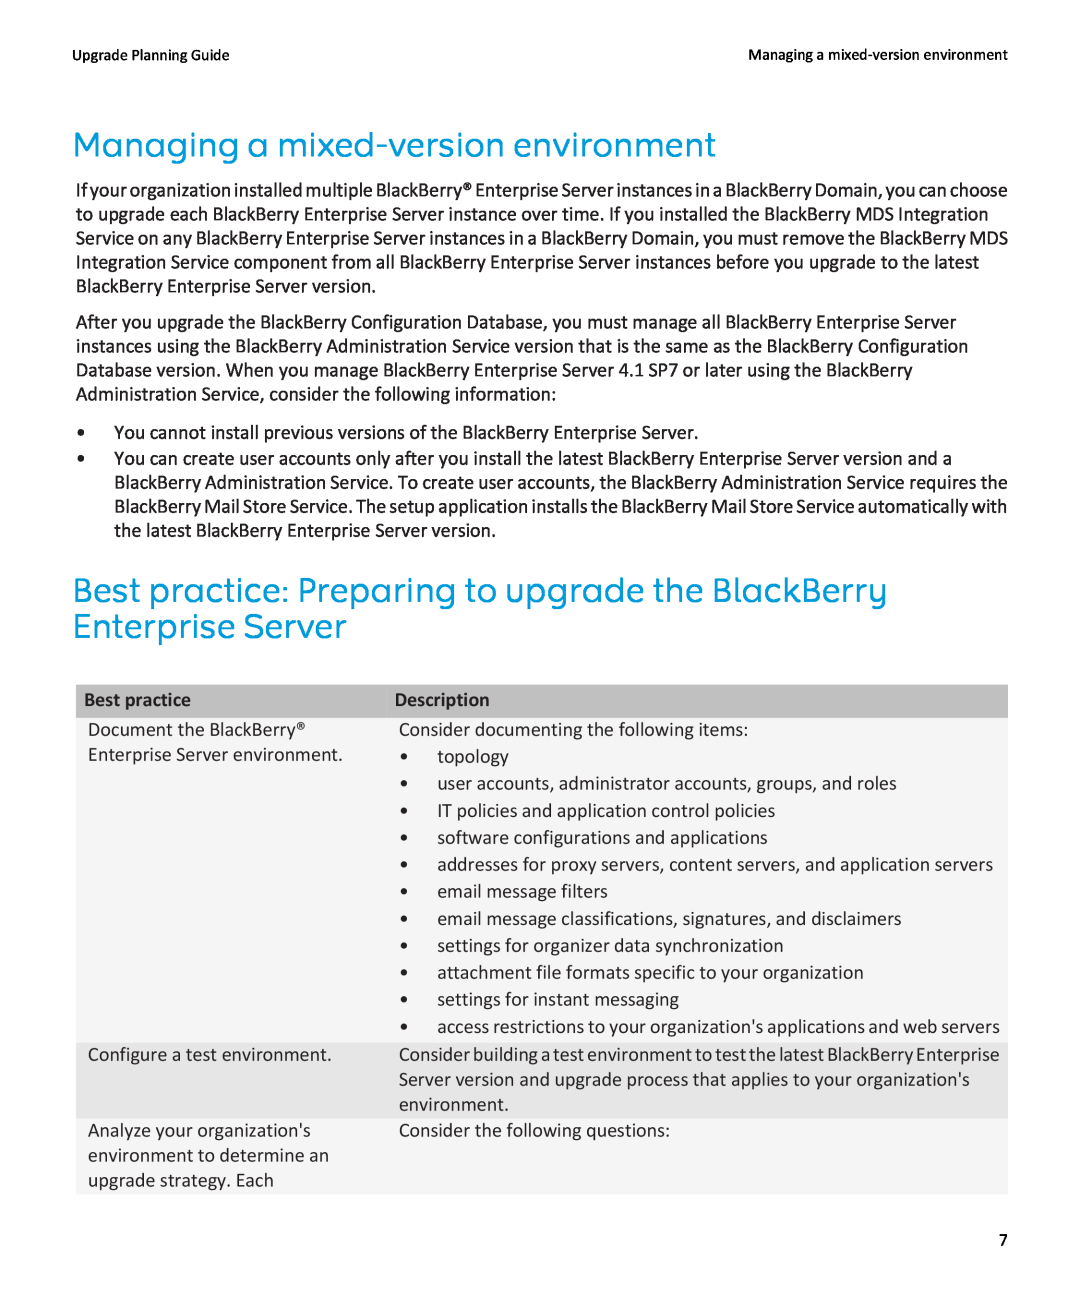 Blackberry blackberry enterprise server manual Managing a mixed-version environment, Best practice, Description 